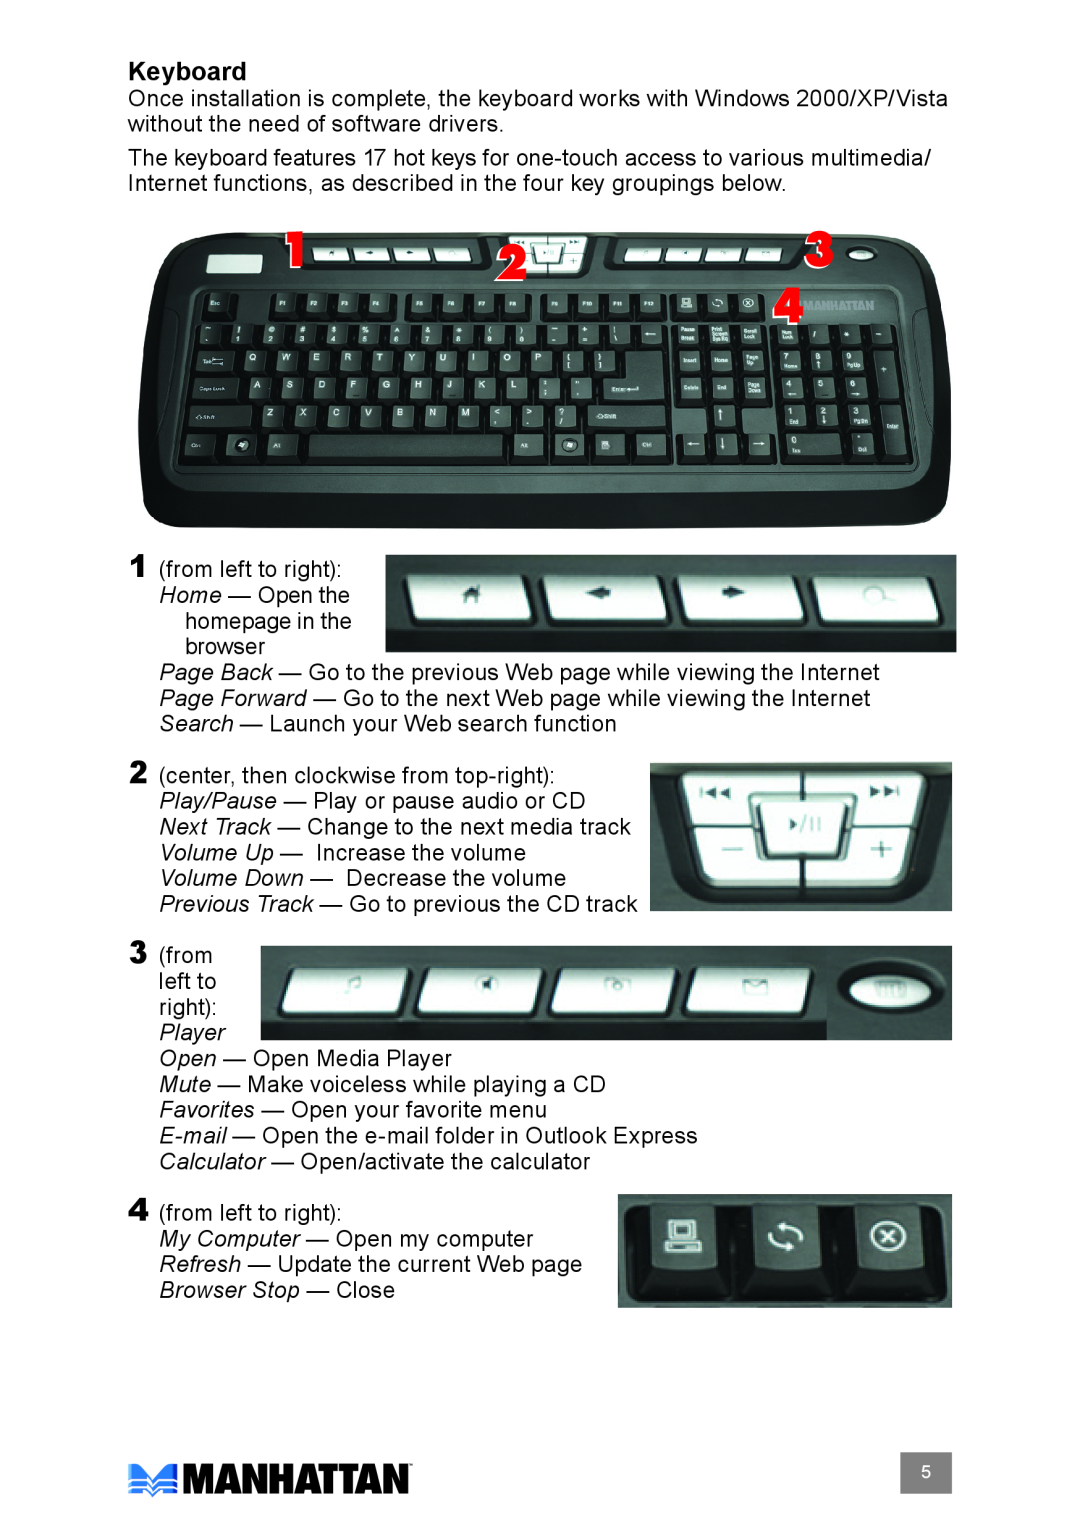 Manhattan Computer Products 177122 user manual Keyboard 